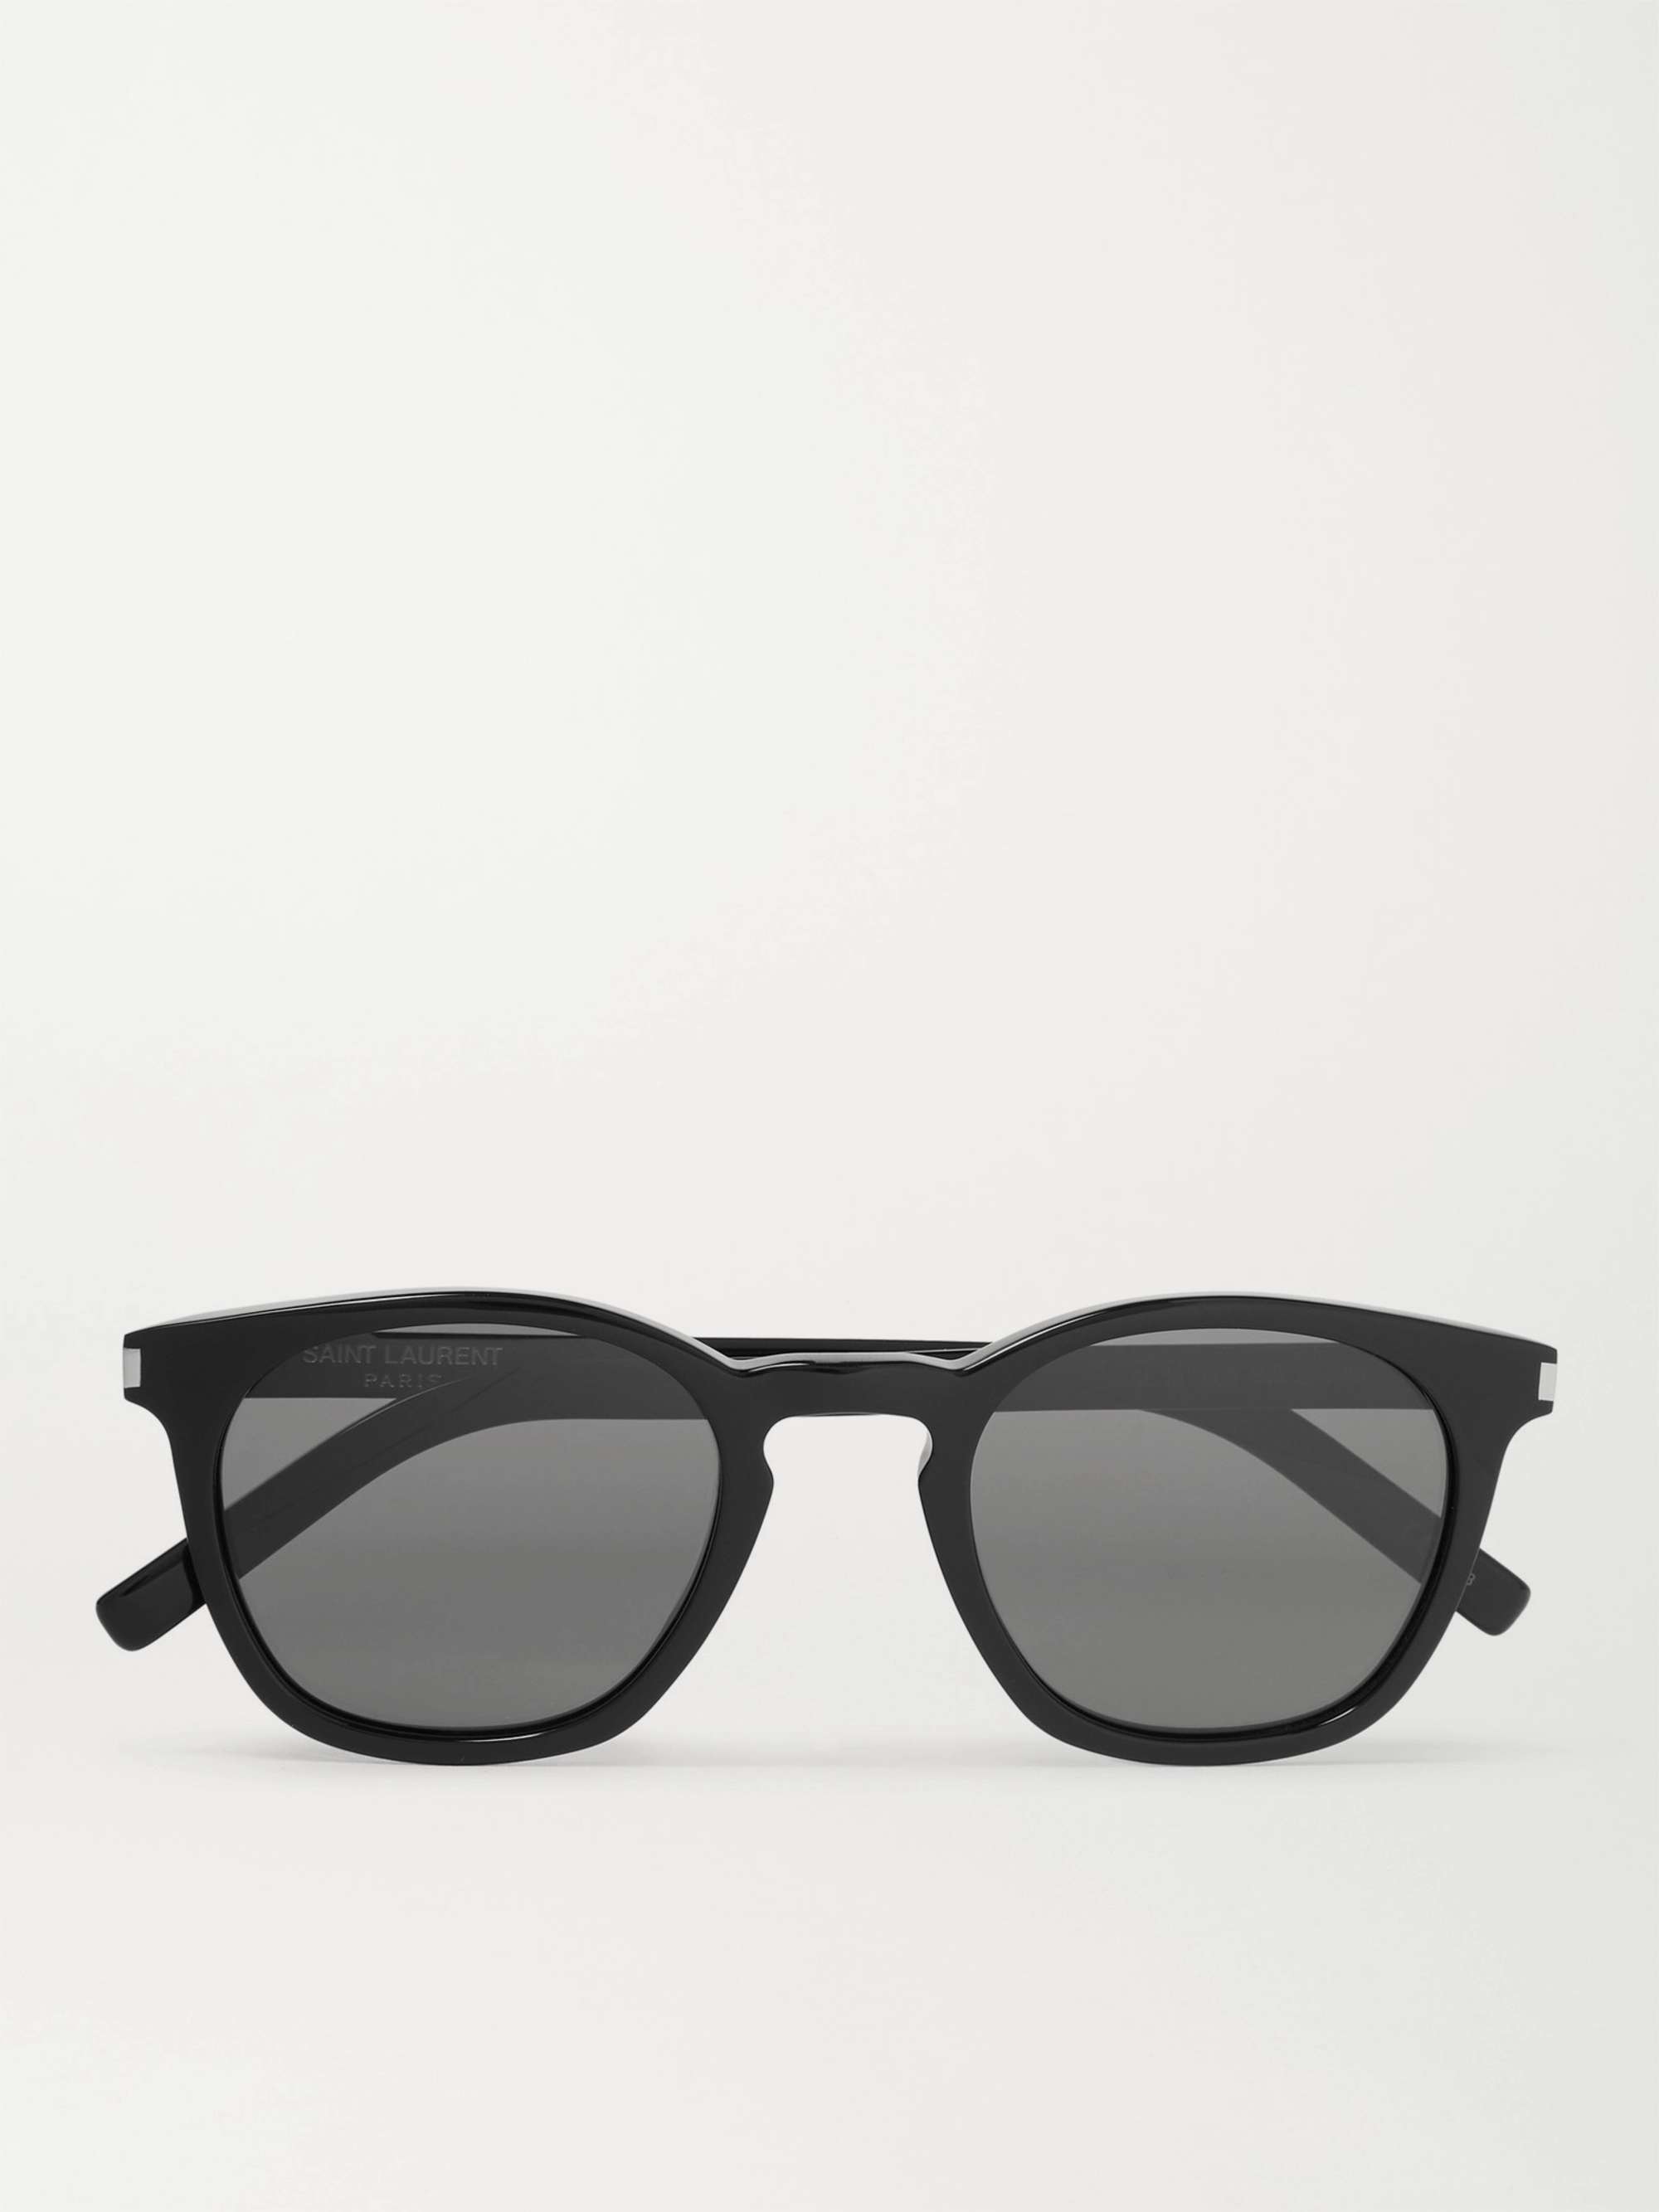 SAINT LAURENT EYEWEAR Round-Frame Acetate Sunglasses